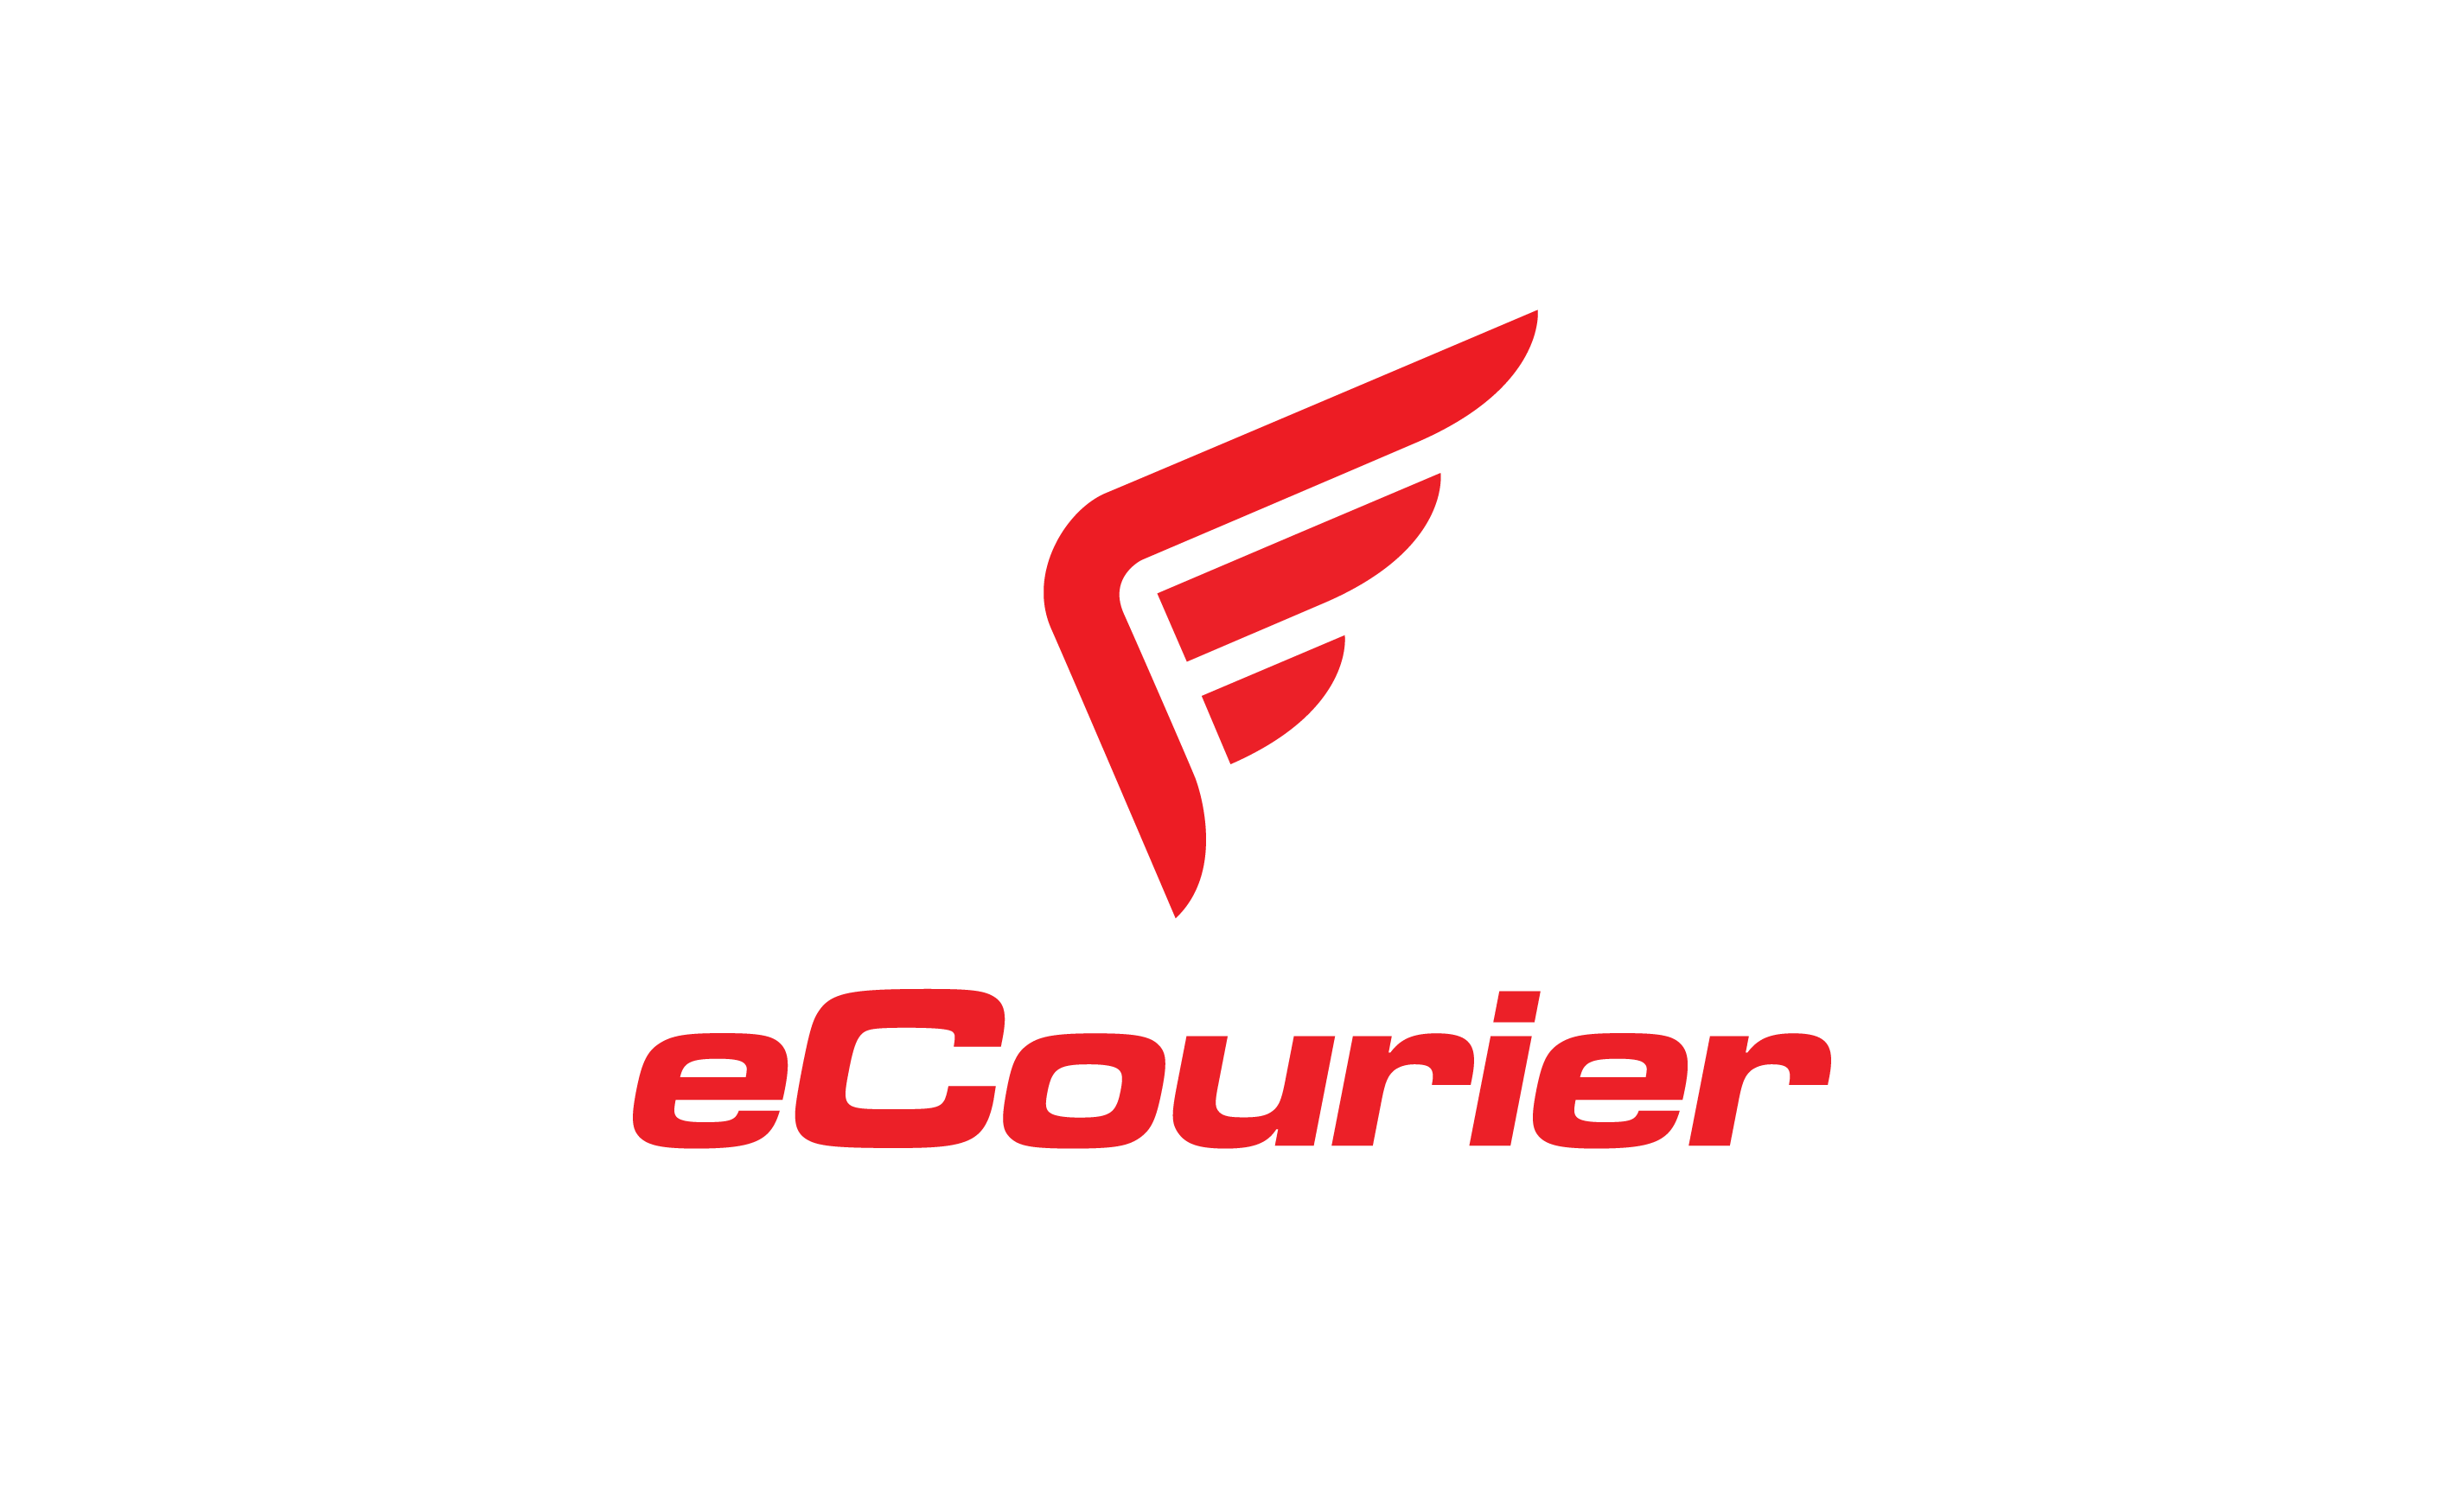 eCourier logo